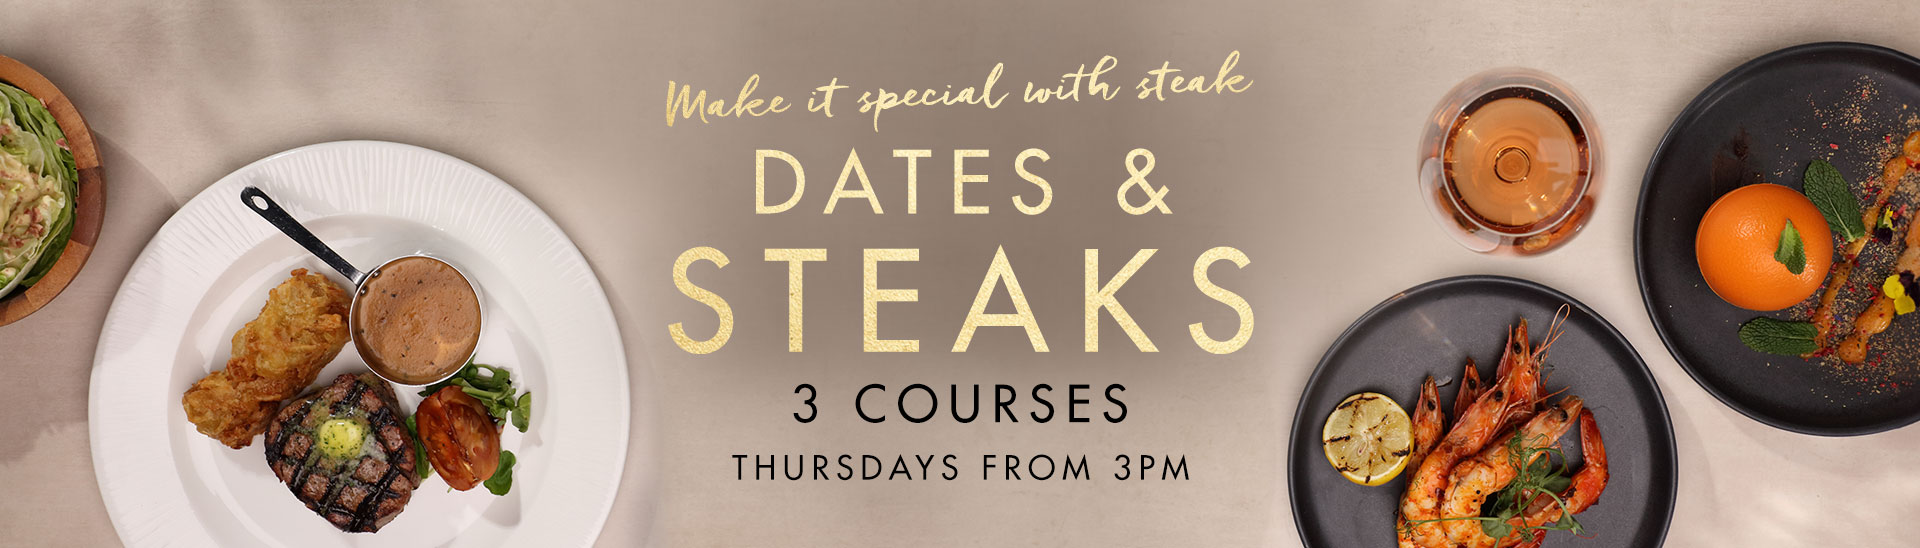 Dates & Steaks at Miller & Carter Beaconsfield